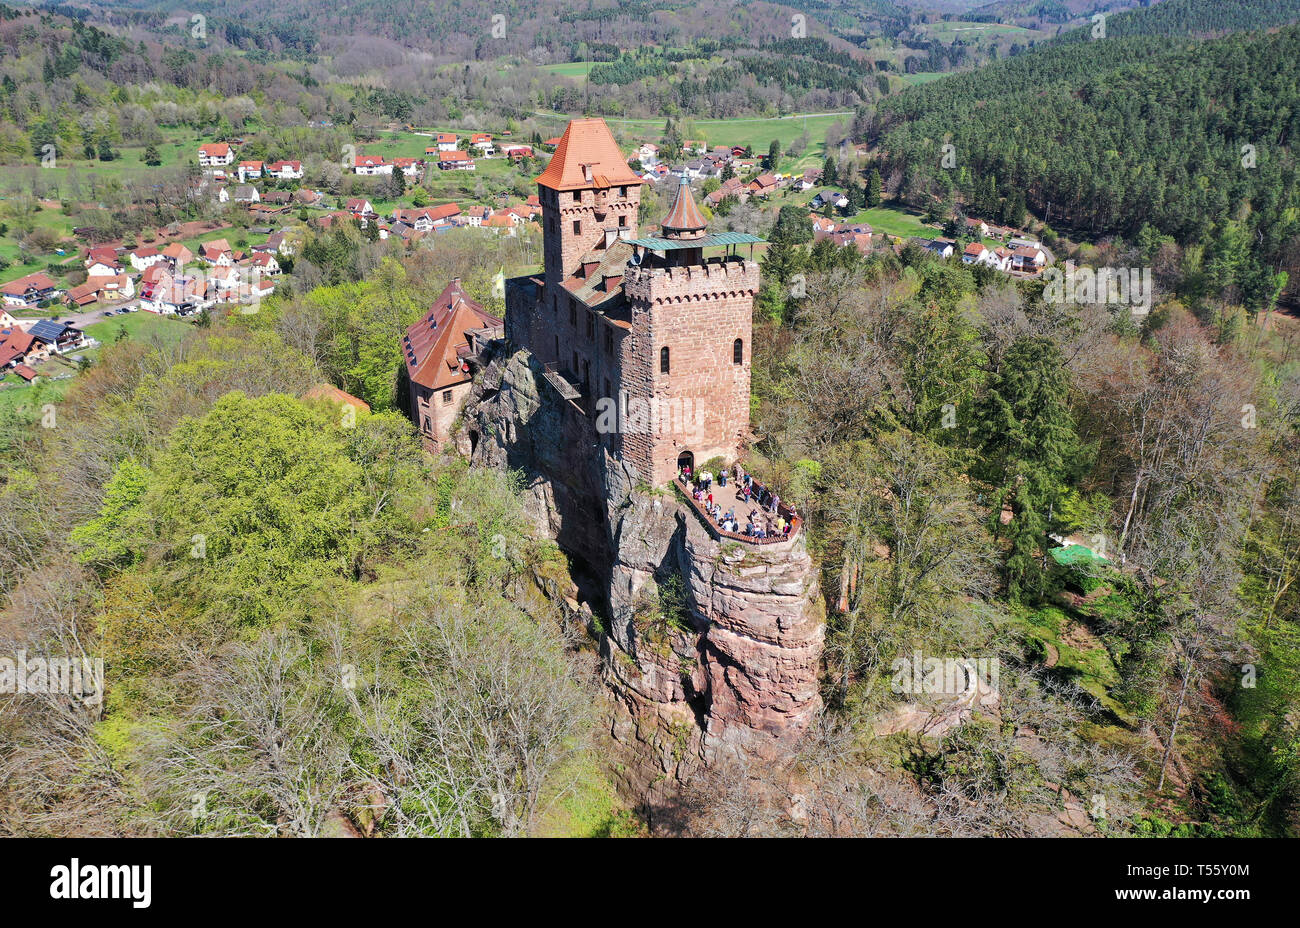 Aerial view of Berwartstein castle, medieval robber knight castle at village Erlenbach at Dahn, Wasgau, Rhineland-Palatinate, Germany Stock Photo